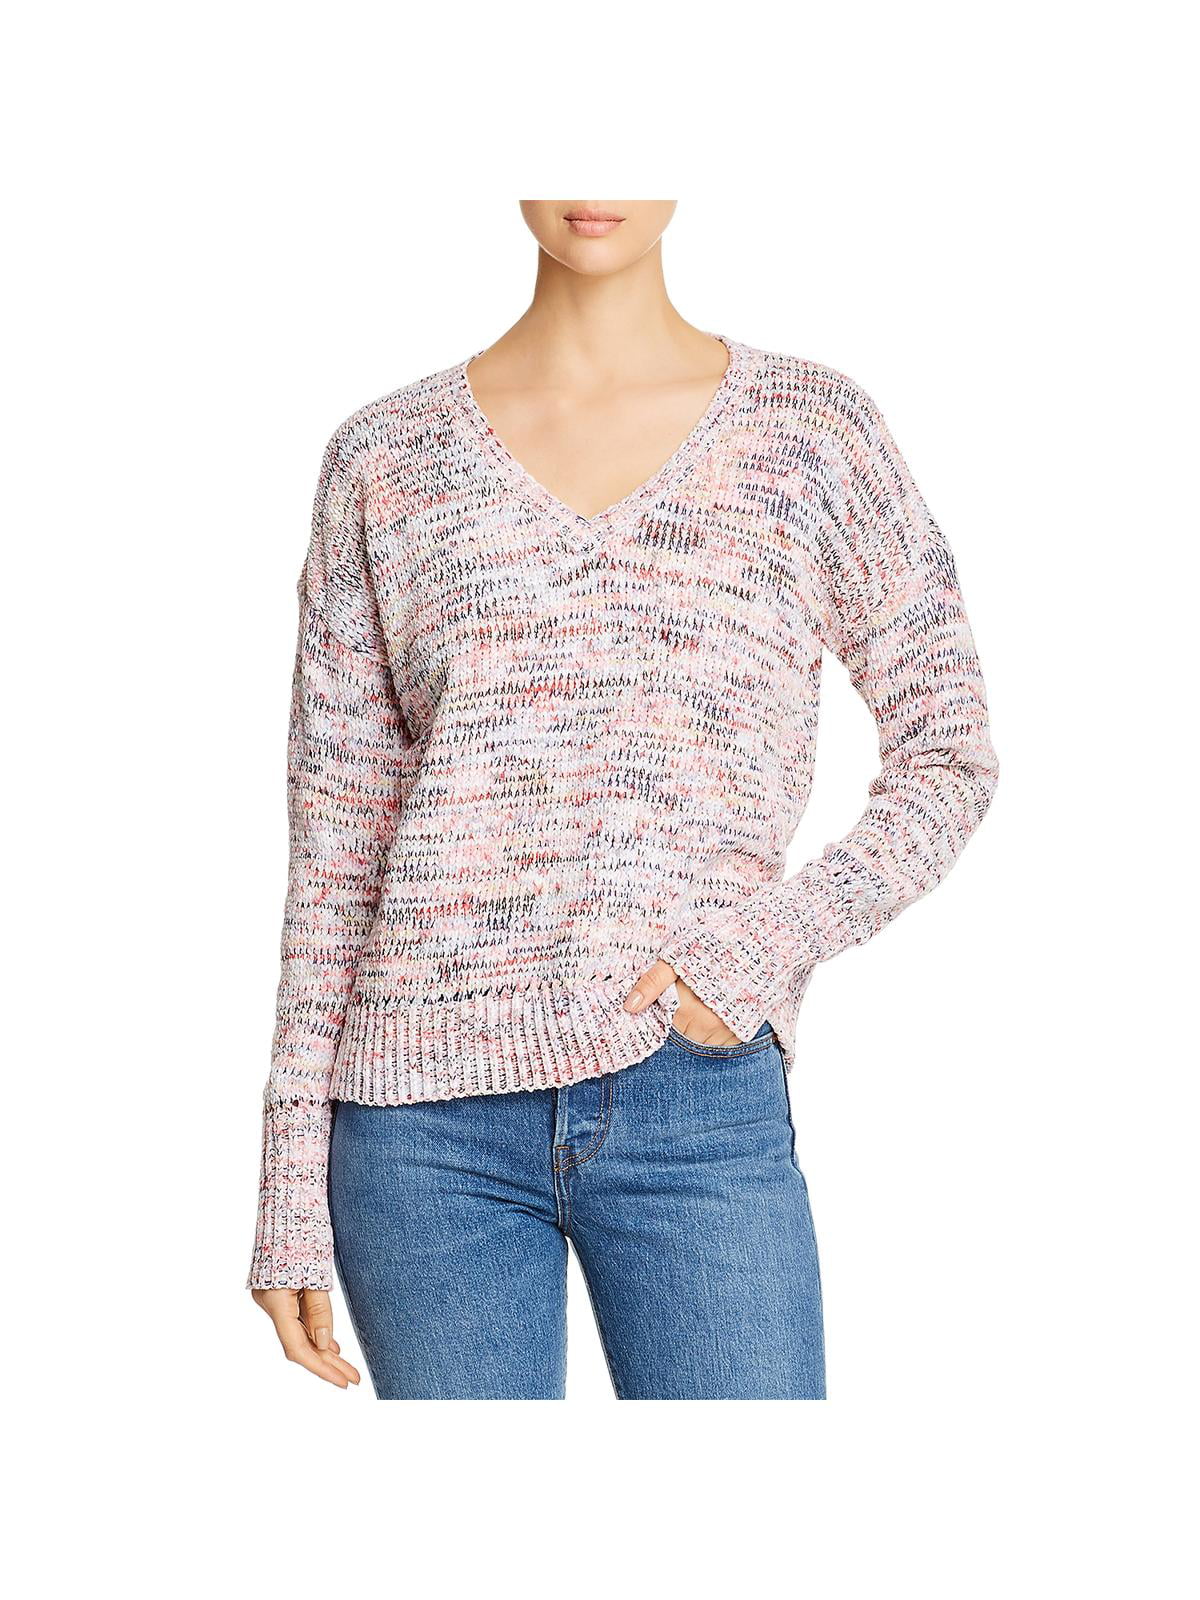 Cobama Womens Soft Chic Slim Fit Knit V Neck Shirt Top Sweater Shirts